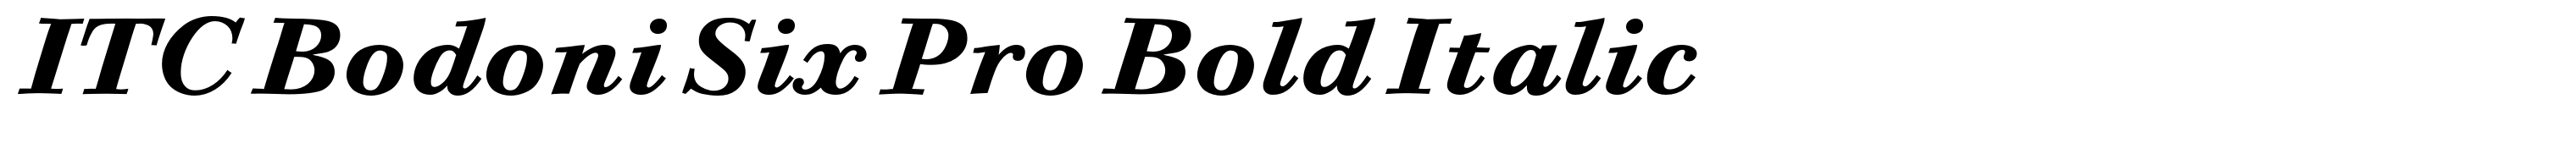 ITC Bodoni Six Pro Bold Italic